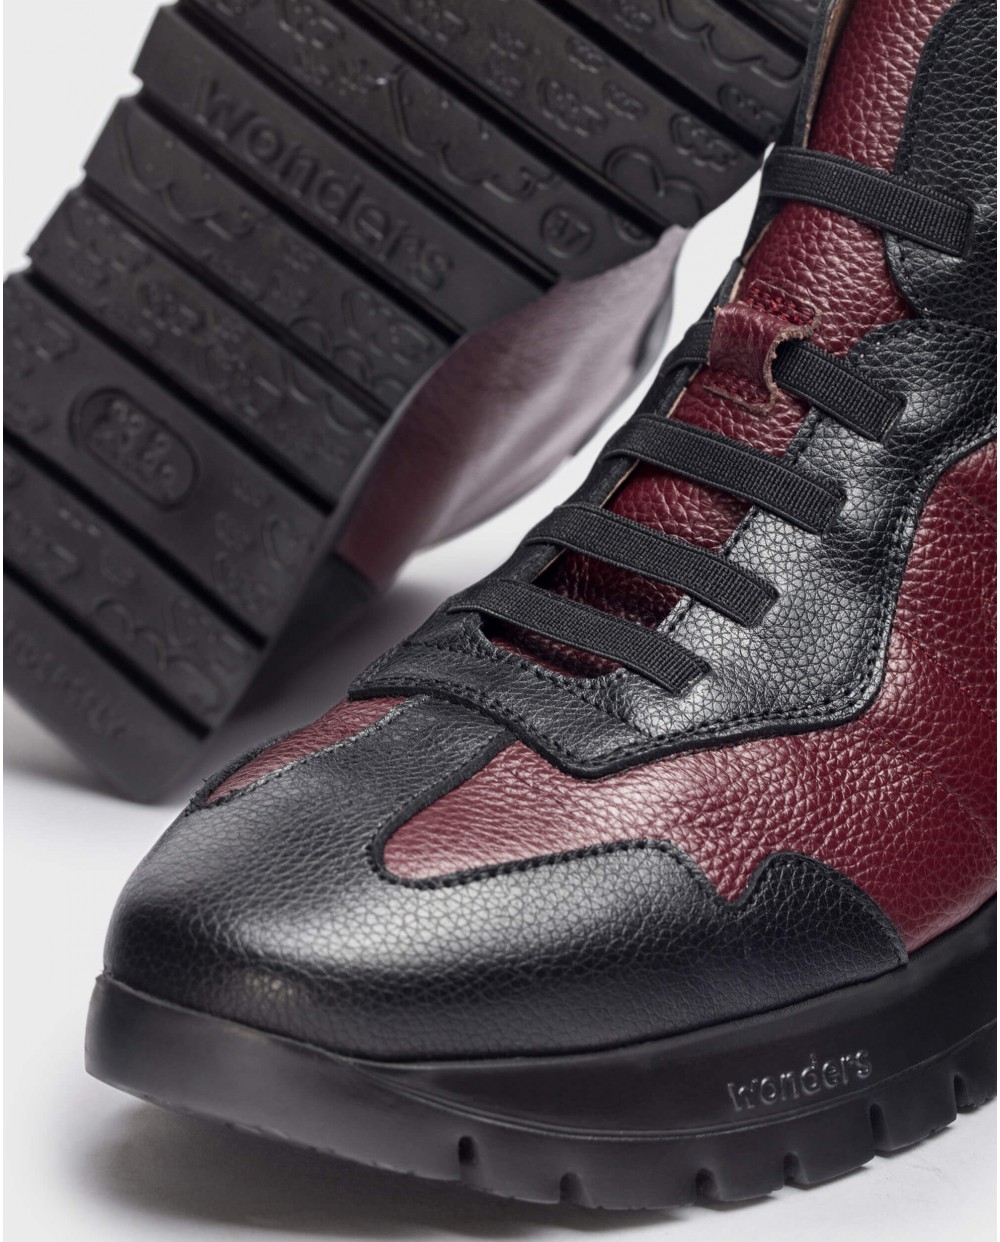 Wonders-Sneakers-England bordeaux ankle boot